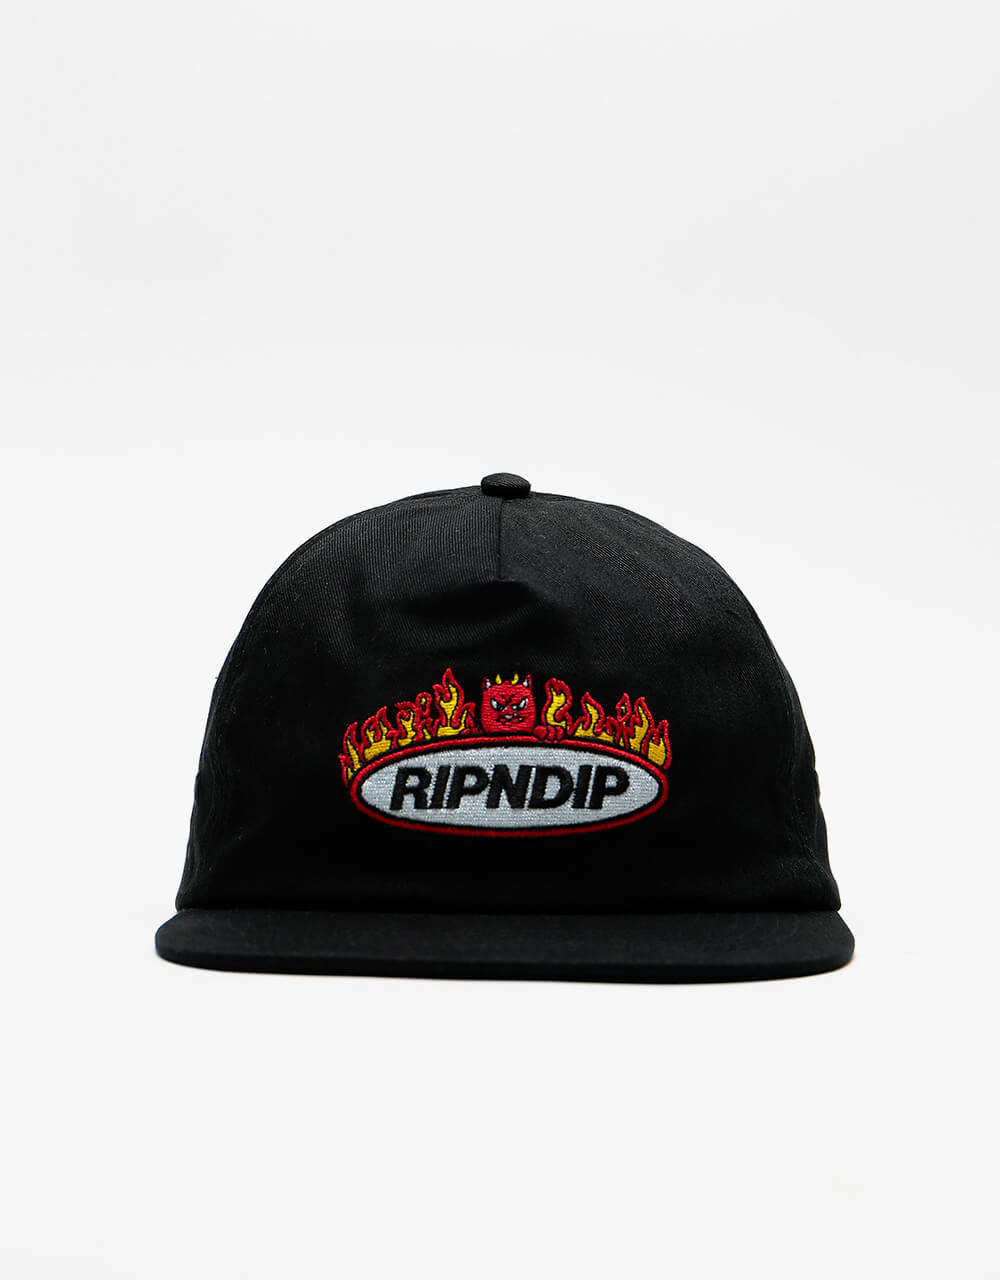 RIPNDIP Welcome To Heck Trucker Cap - Black